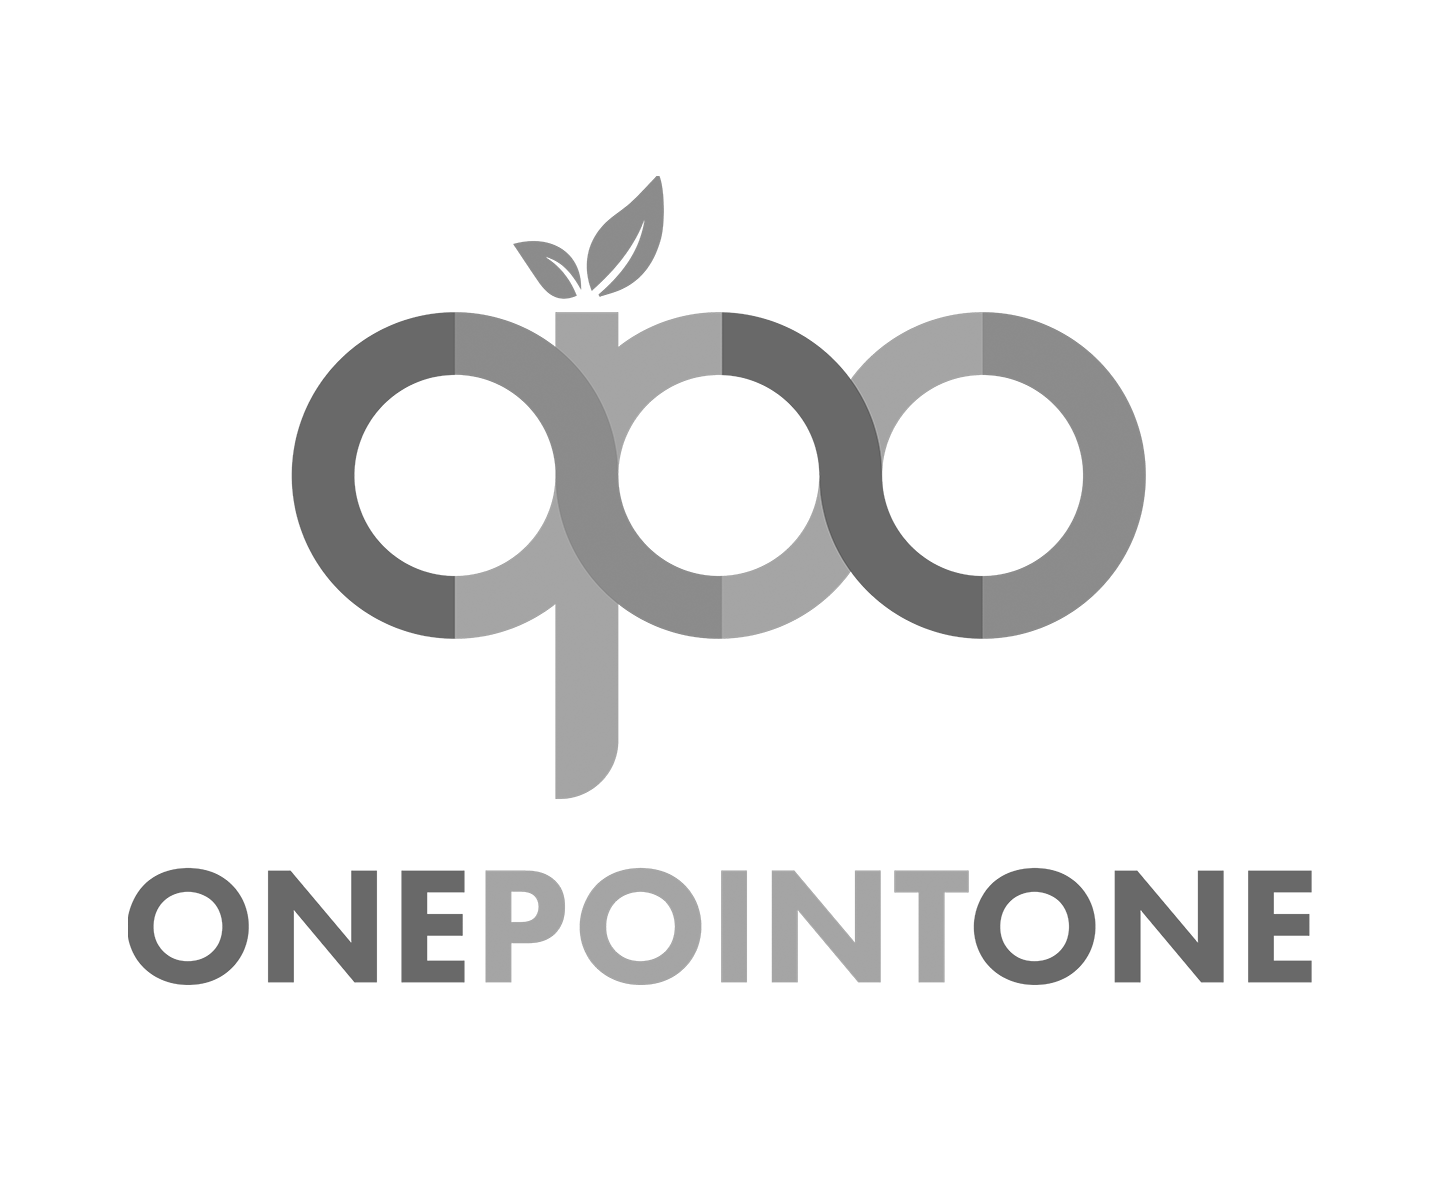 OnePointOne